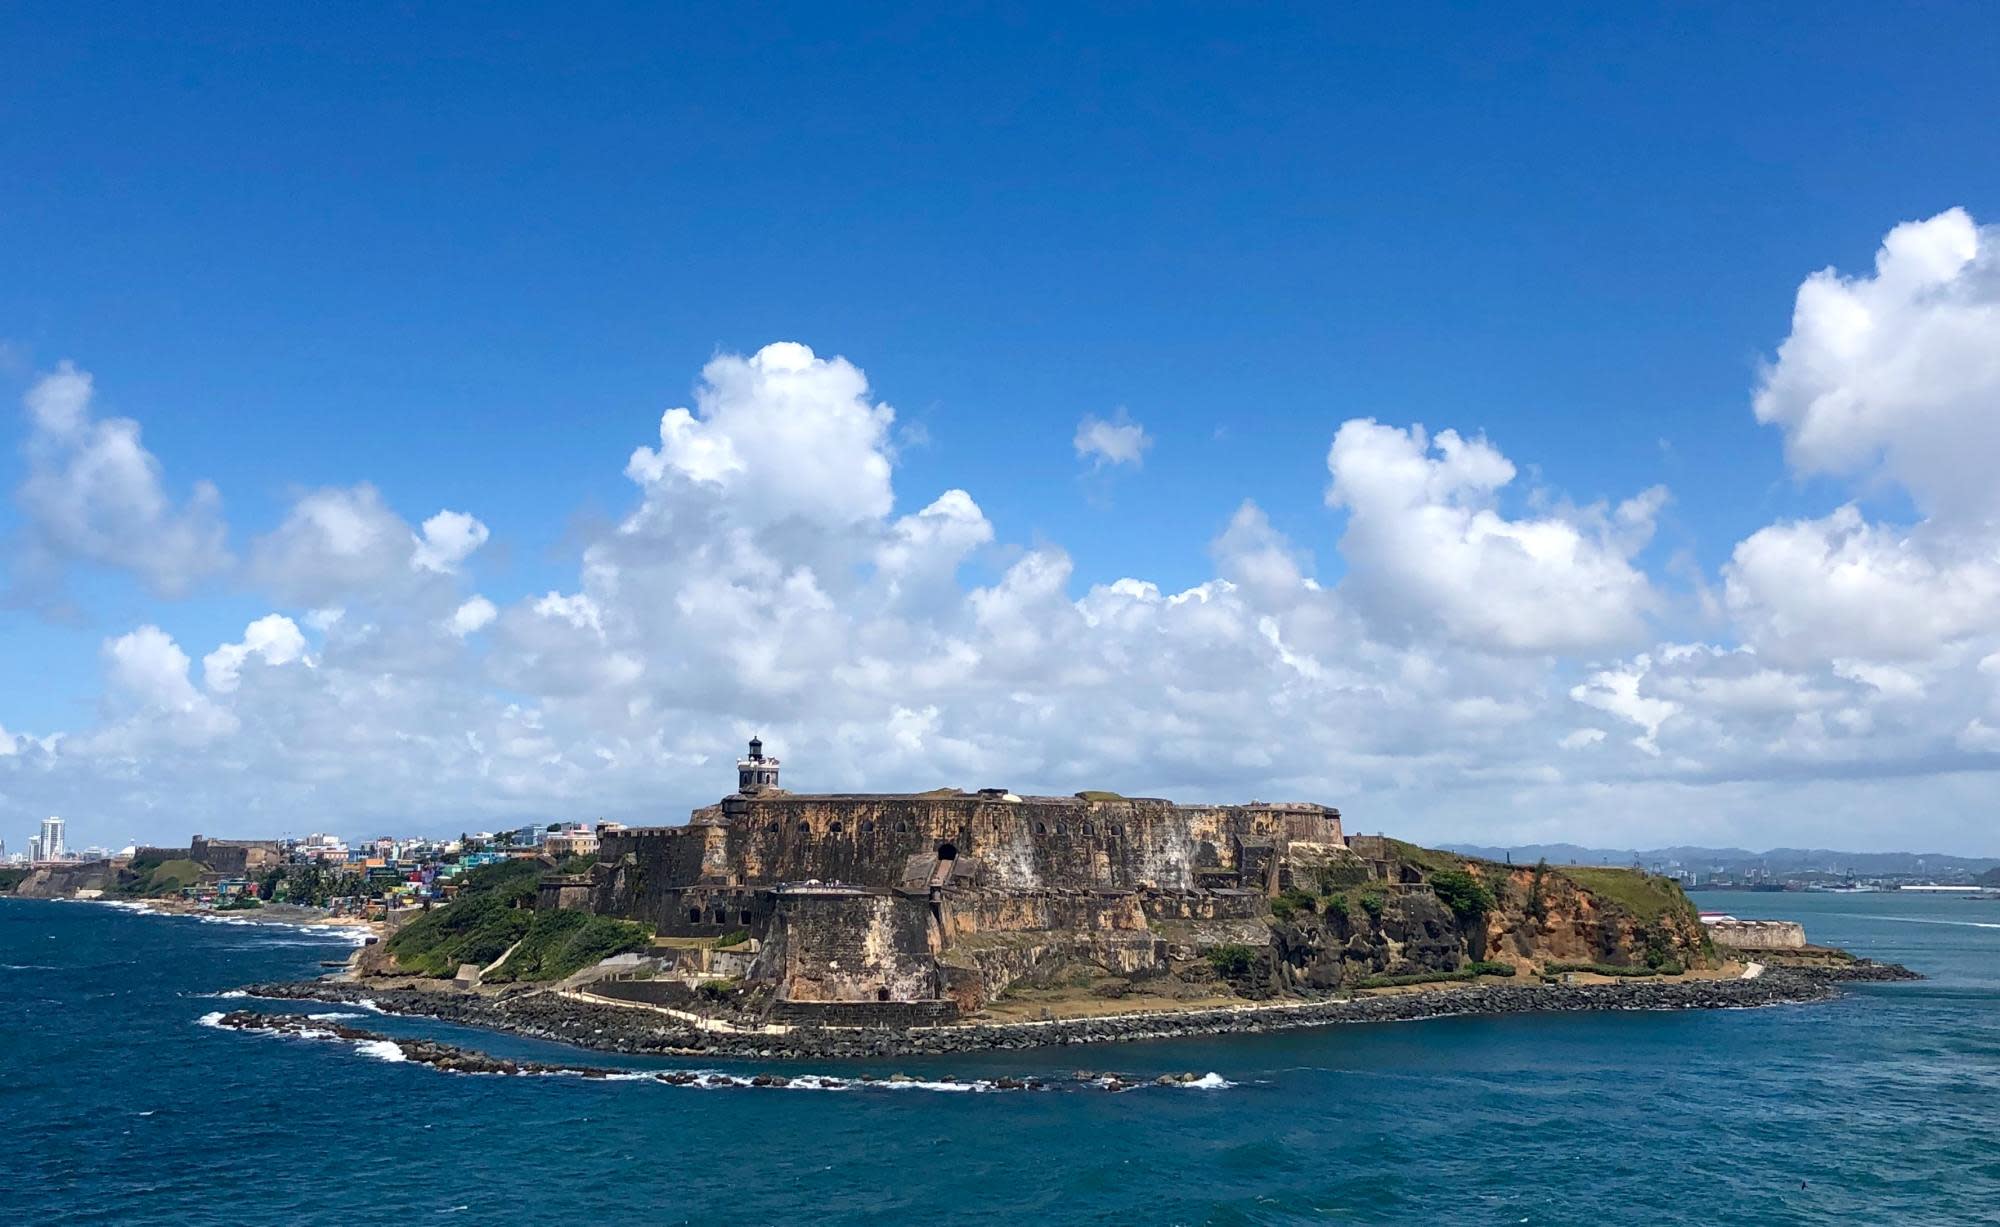 Paseo Del Morro in Old San Juan, Puerto Rico